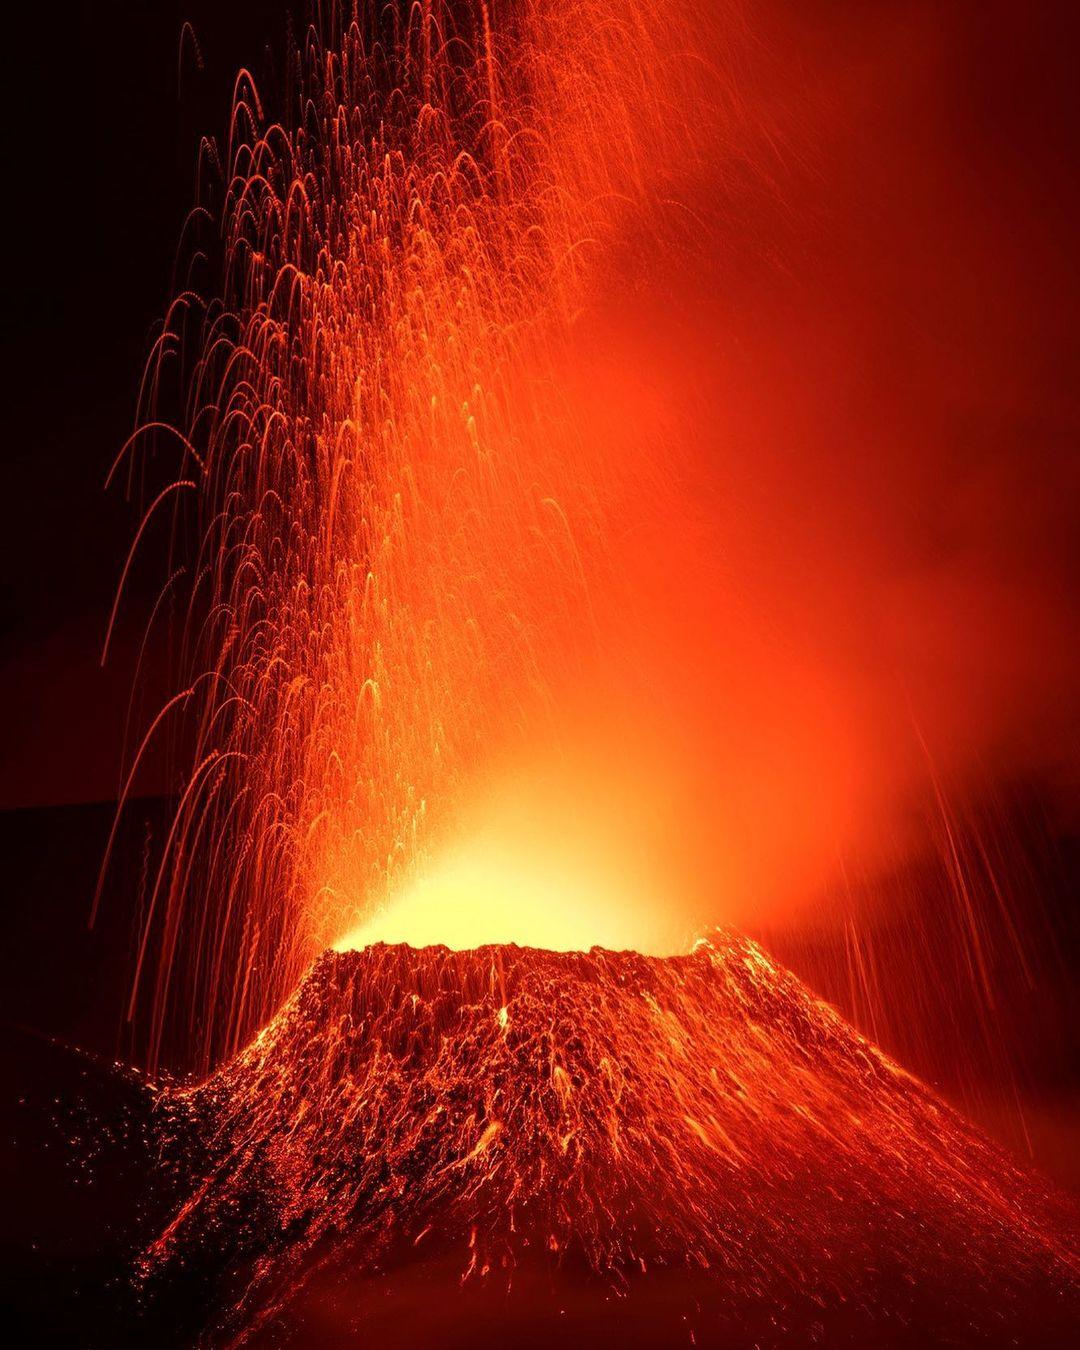 A photo shows Cumbre Vieja volcano spewing lava into the air in the month of October. (Courtesy of <a href="https://www.instagram.com/saulsantosfotografia/">Saúl Santos Díaz</a>)